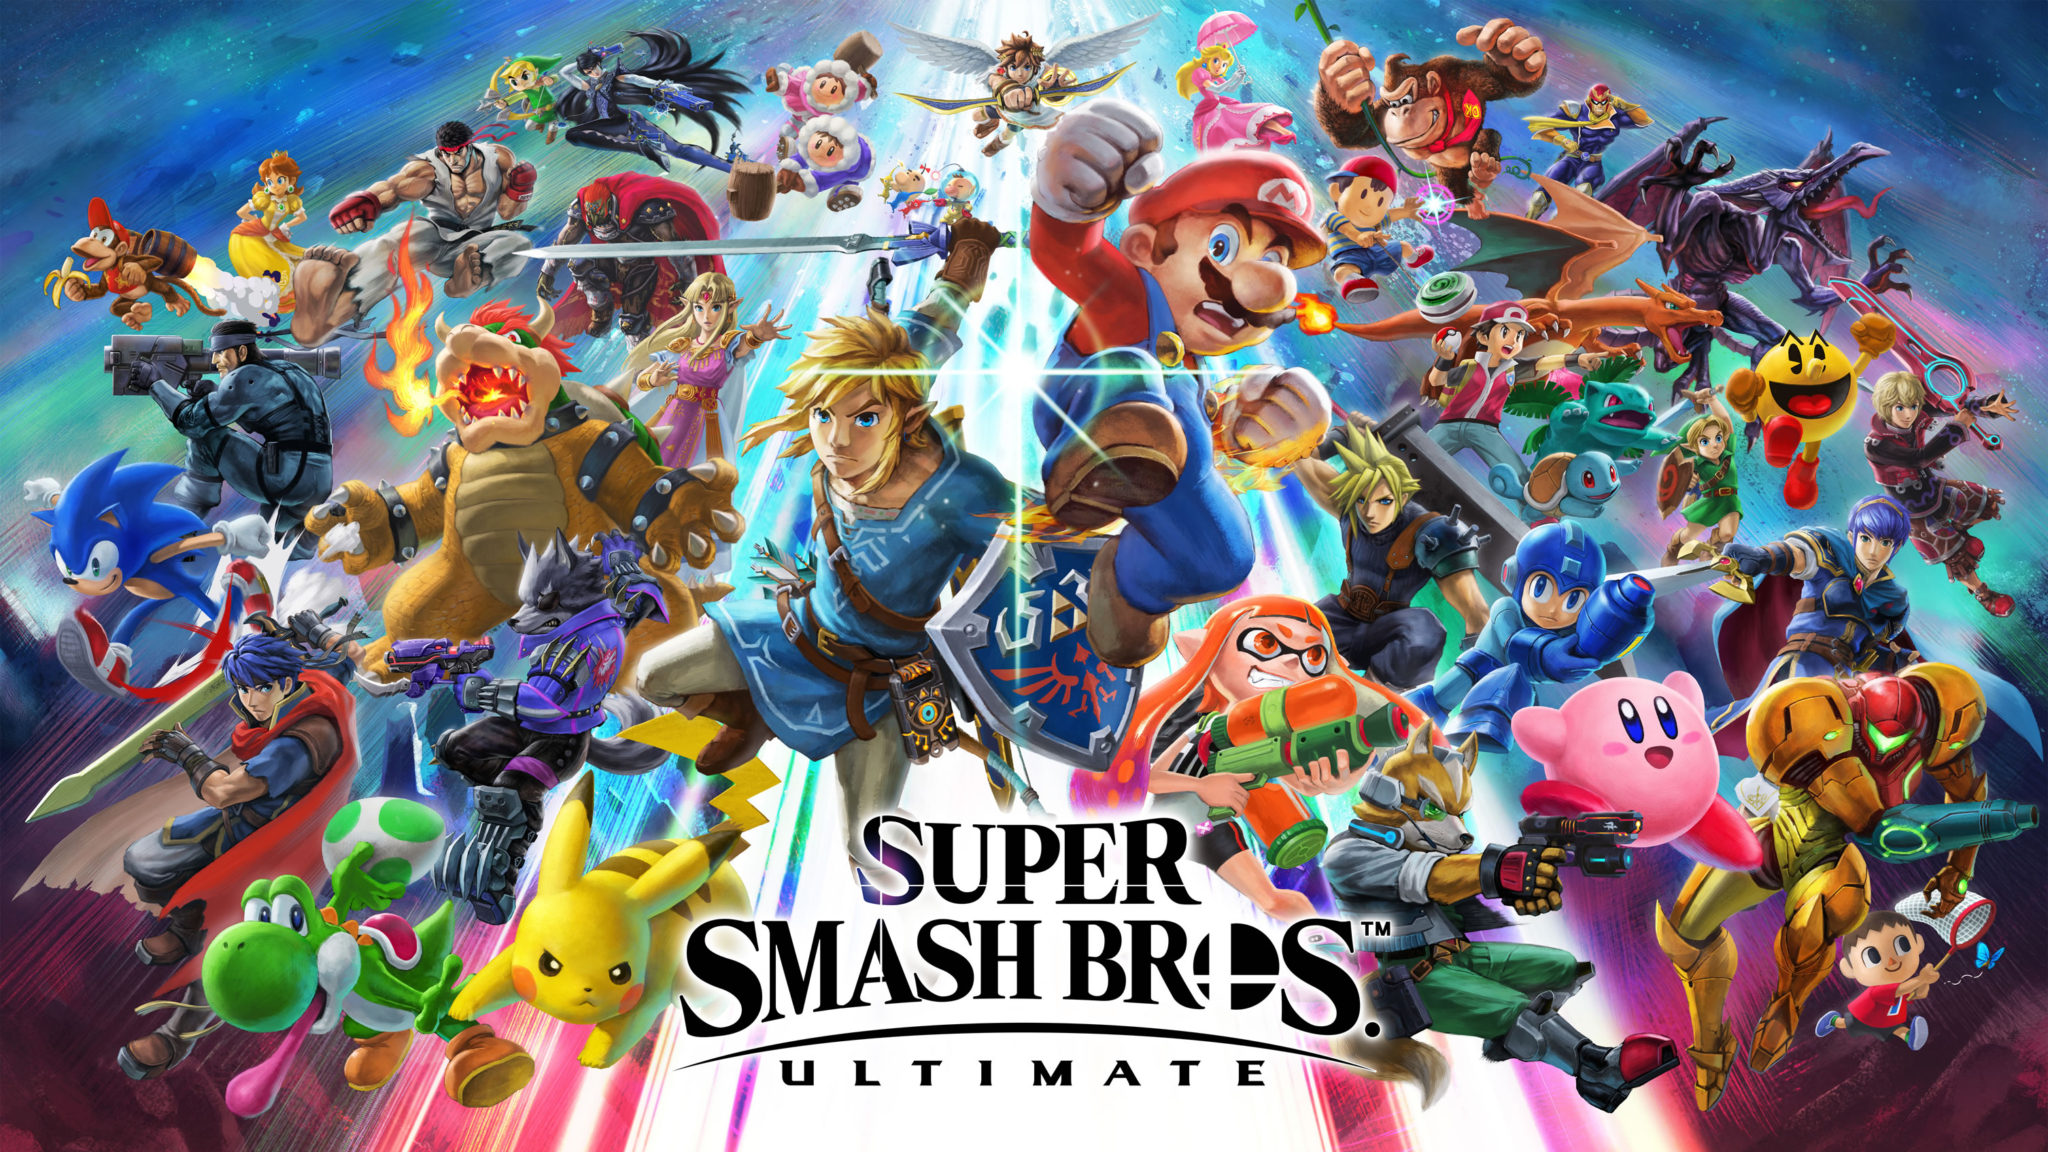 Super Smash Bros.Ultimate